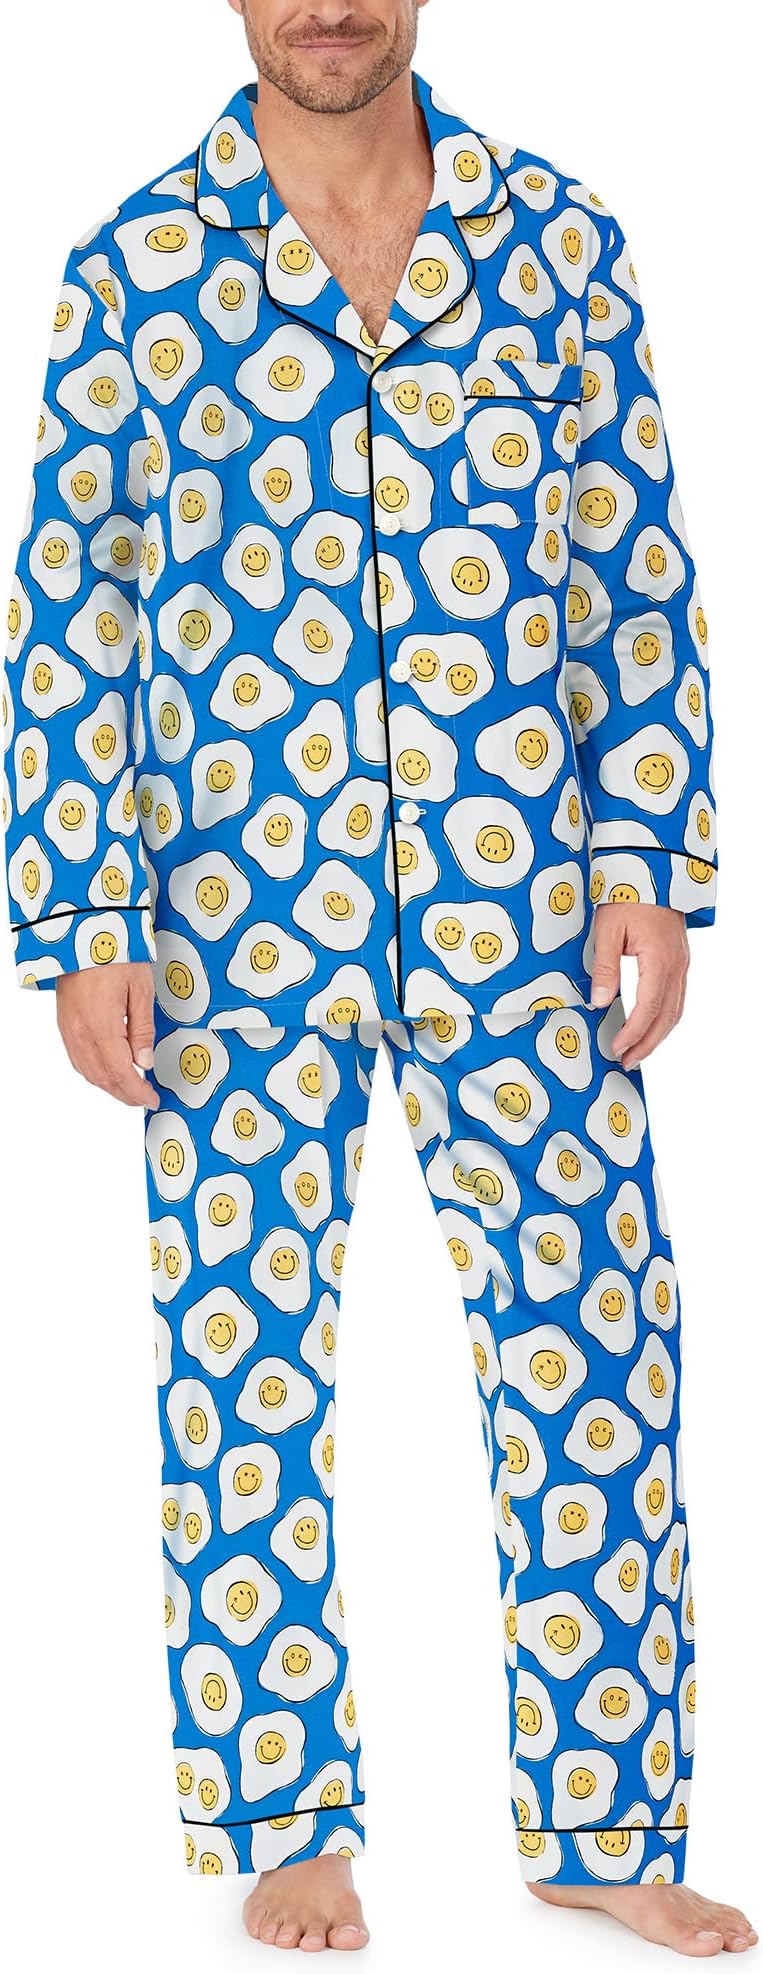 Zappos Print Lab: классический пижамный комплект с длинными рукавами Sunny Side Up Bedhead PJs, цвет Sunny Side Up seven7een набор для макияжа sunny side up total look palette